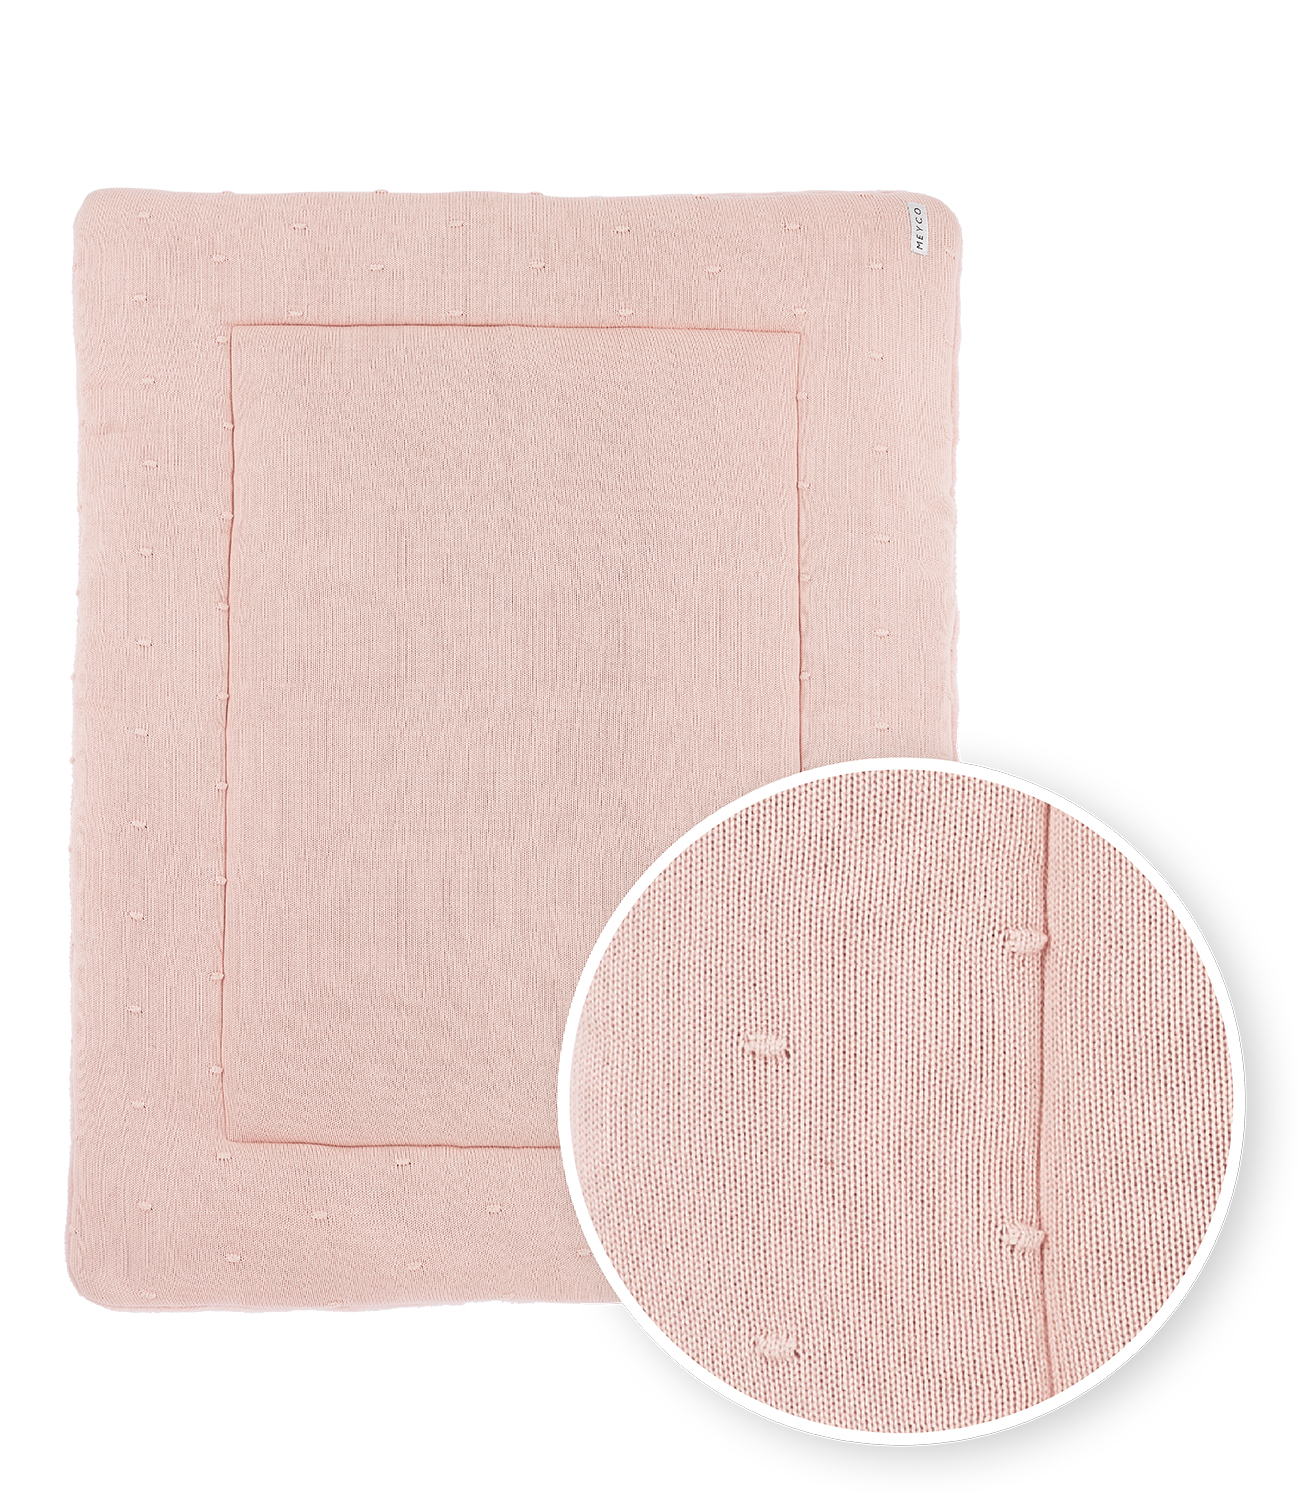 Laufgittereinlage Mini Knots teddy - soft pink - 77x97cm